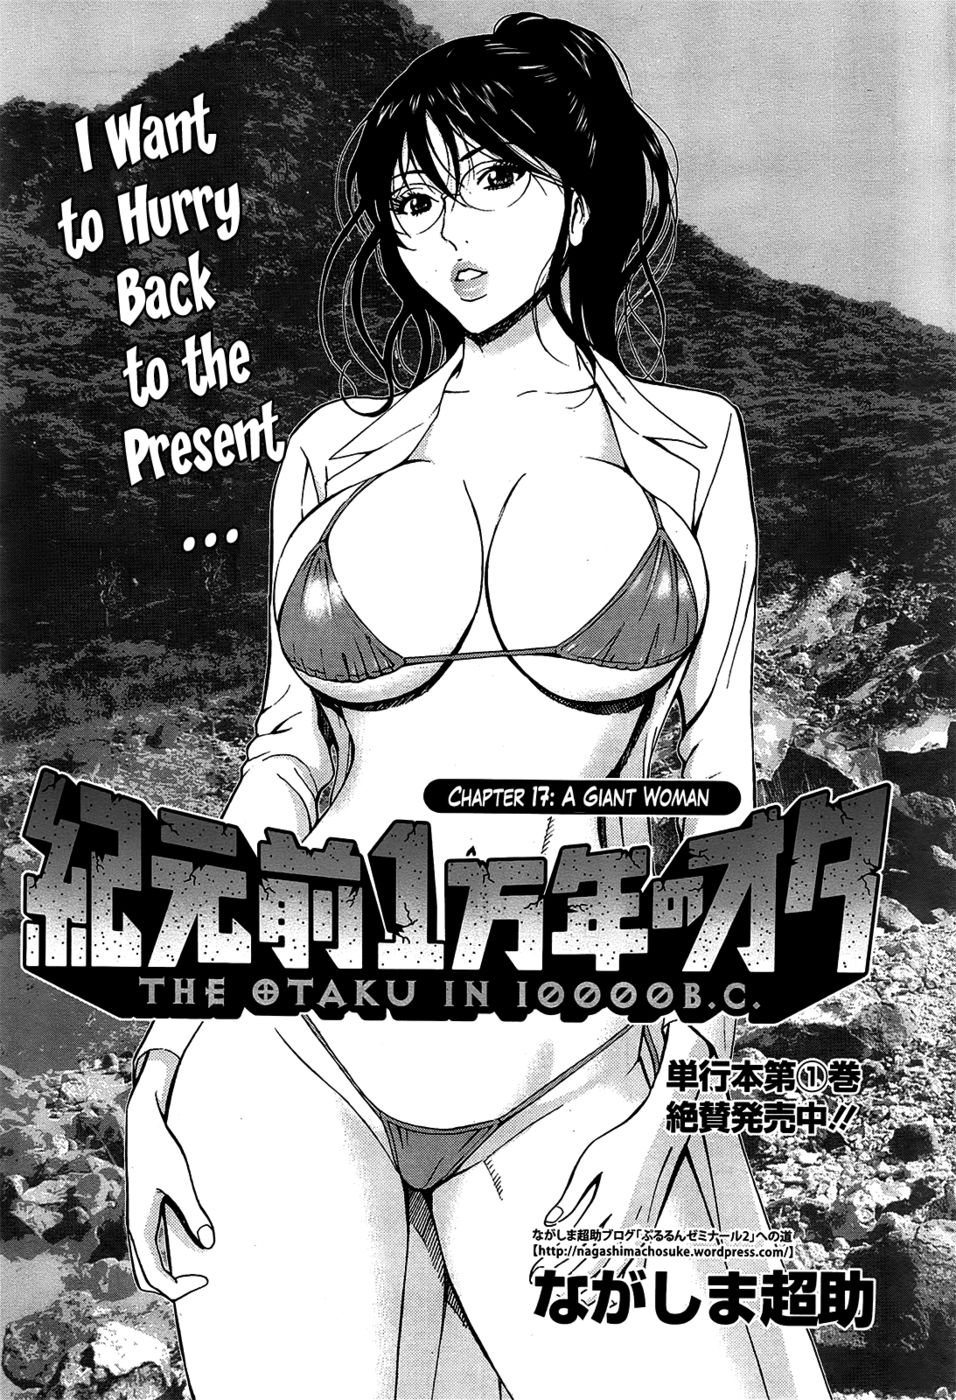 Hentai Manga Comic-The Otaku in 10,000 B.C.-Chapter 17-1